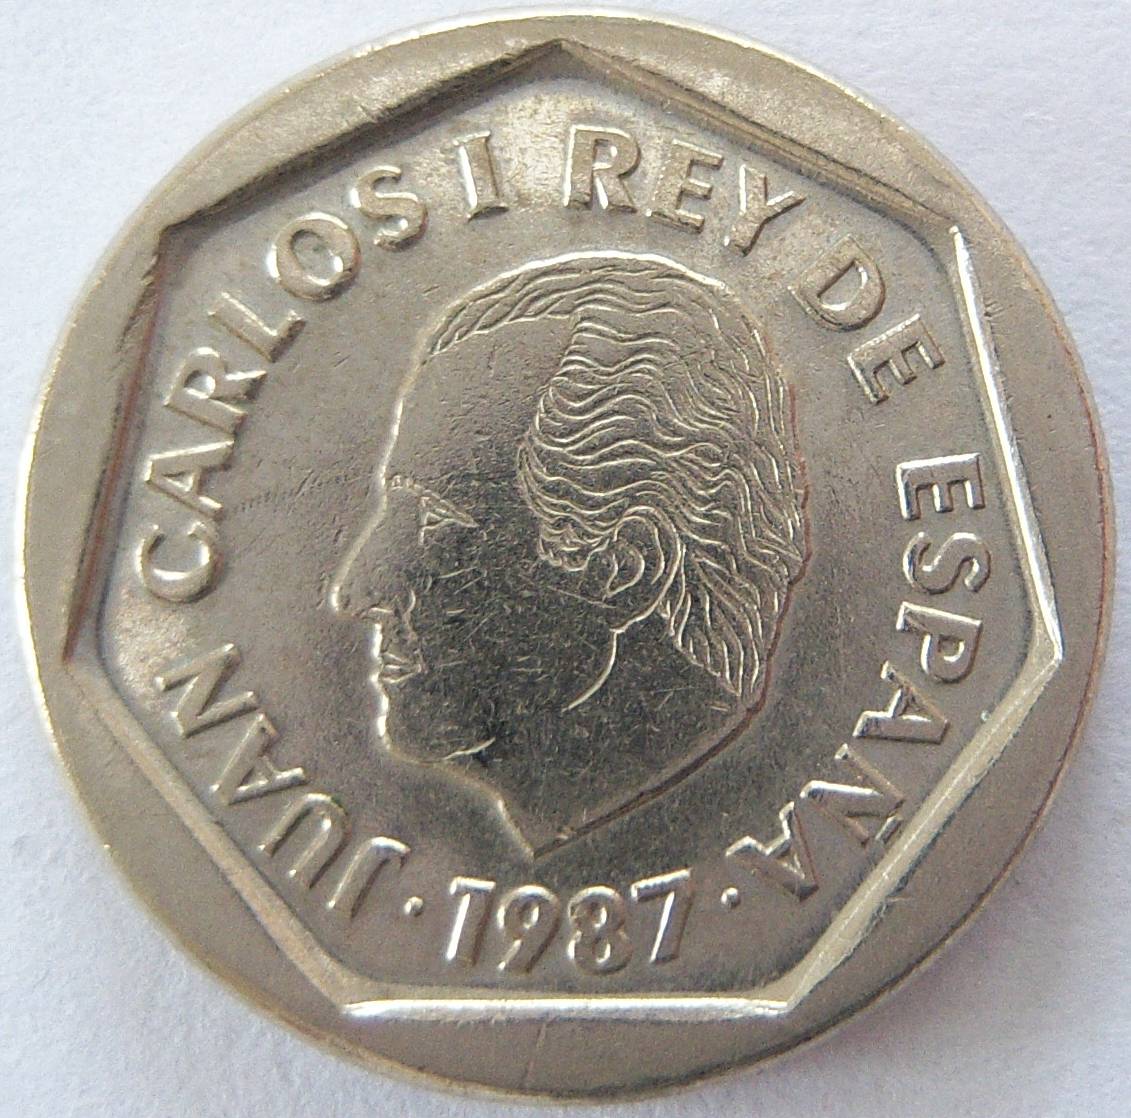  Spanien 200 Pesetas 1987   